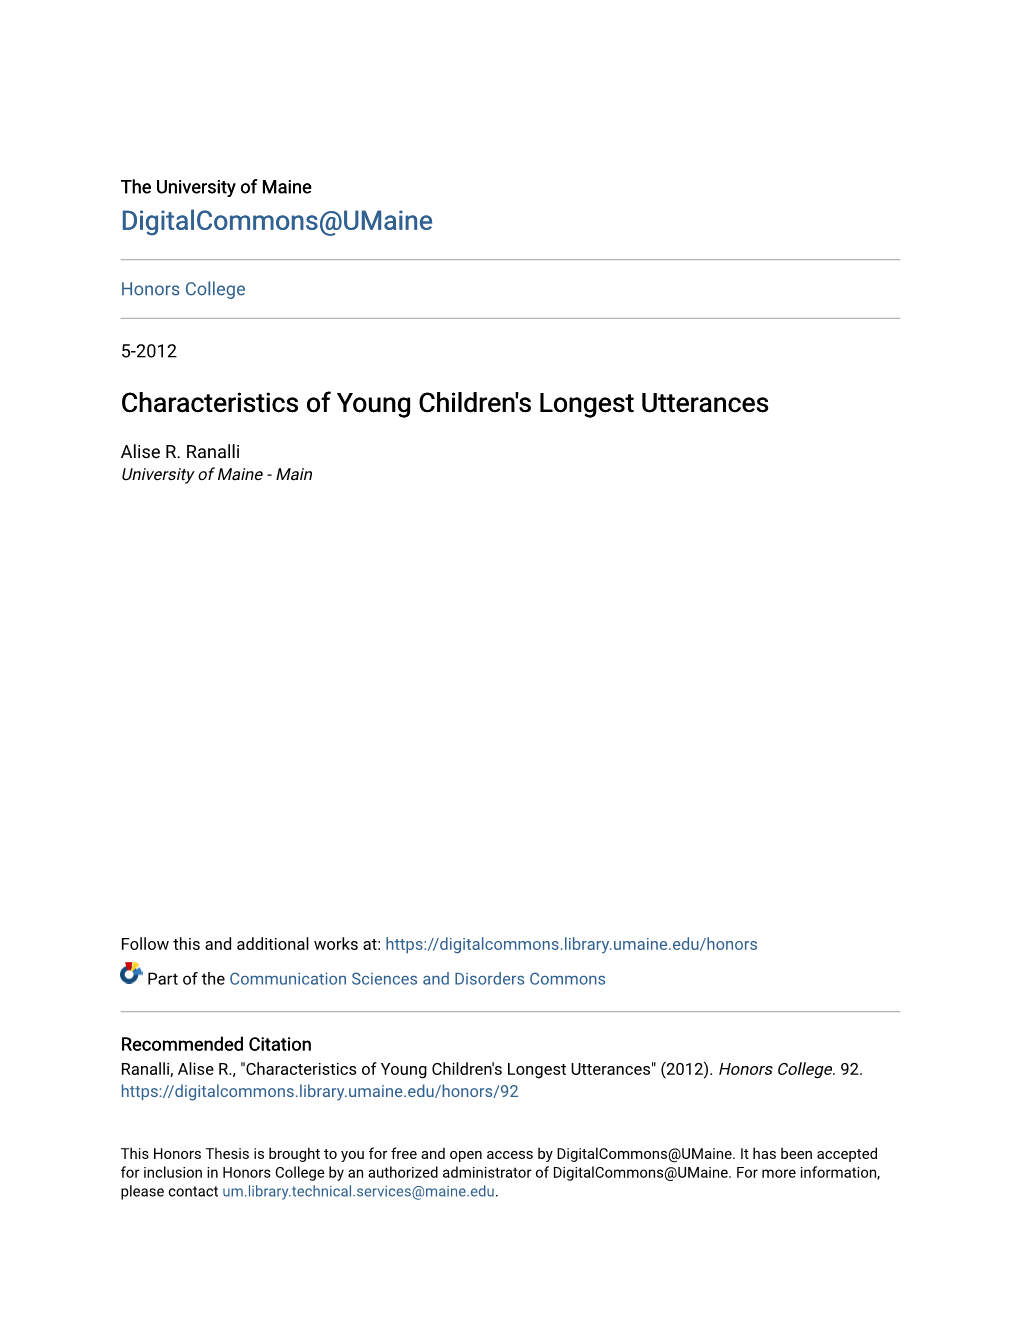 Characteristics of Young Children's Longest Utterances